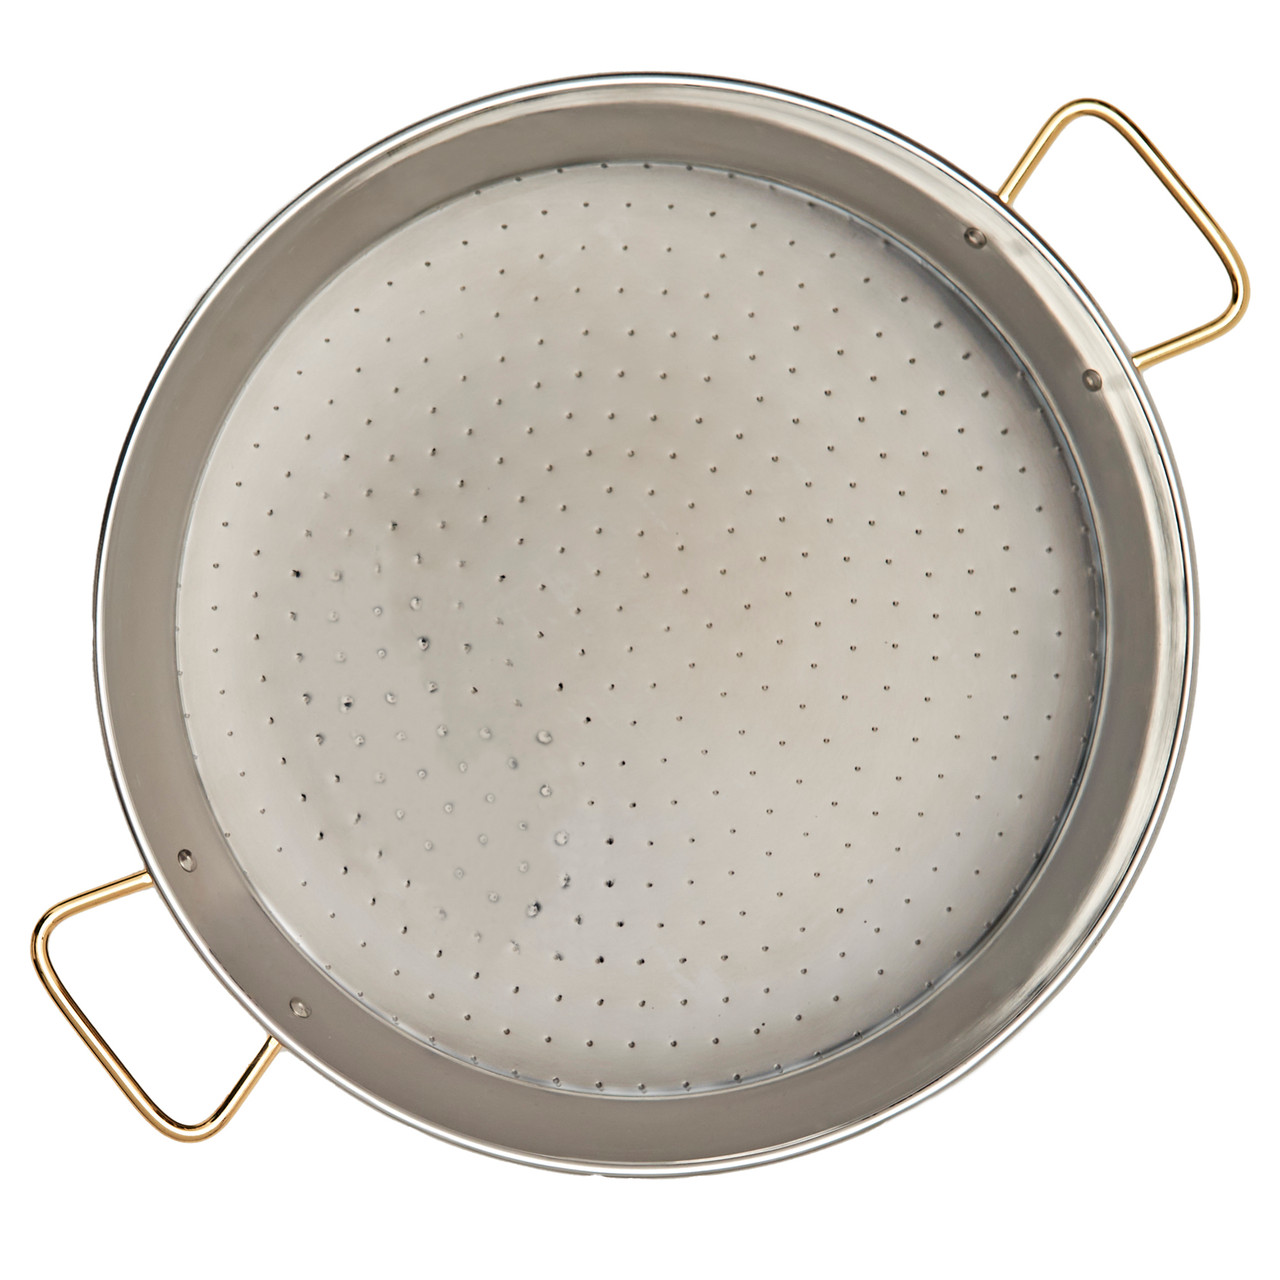 Garcima 14-inch Stainless Flat Bottom Paella Pan, 36cm